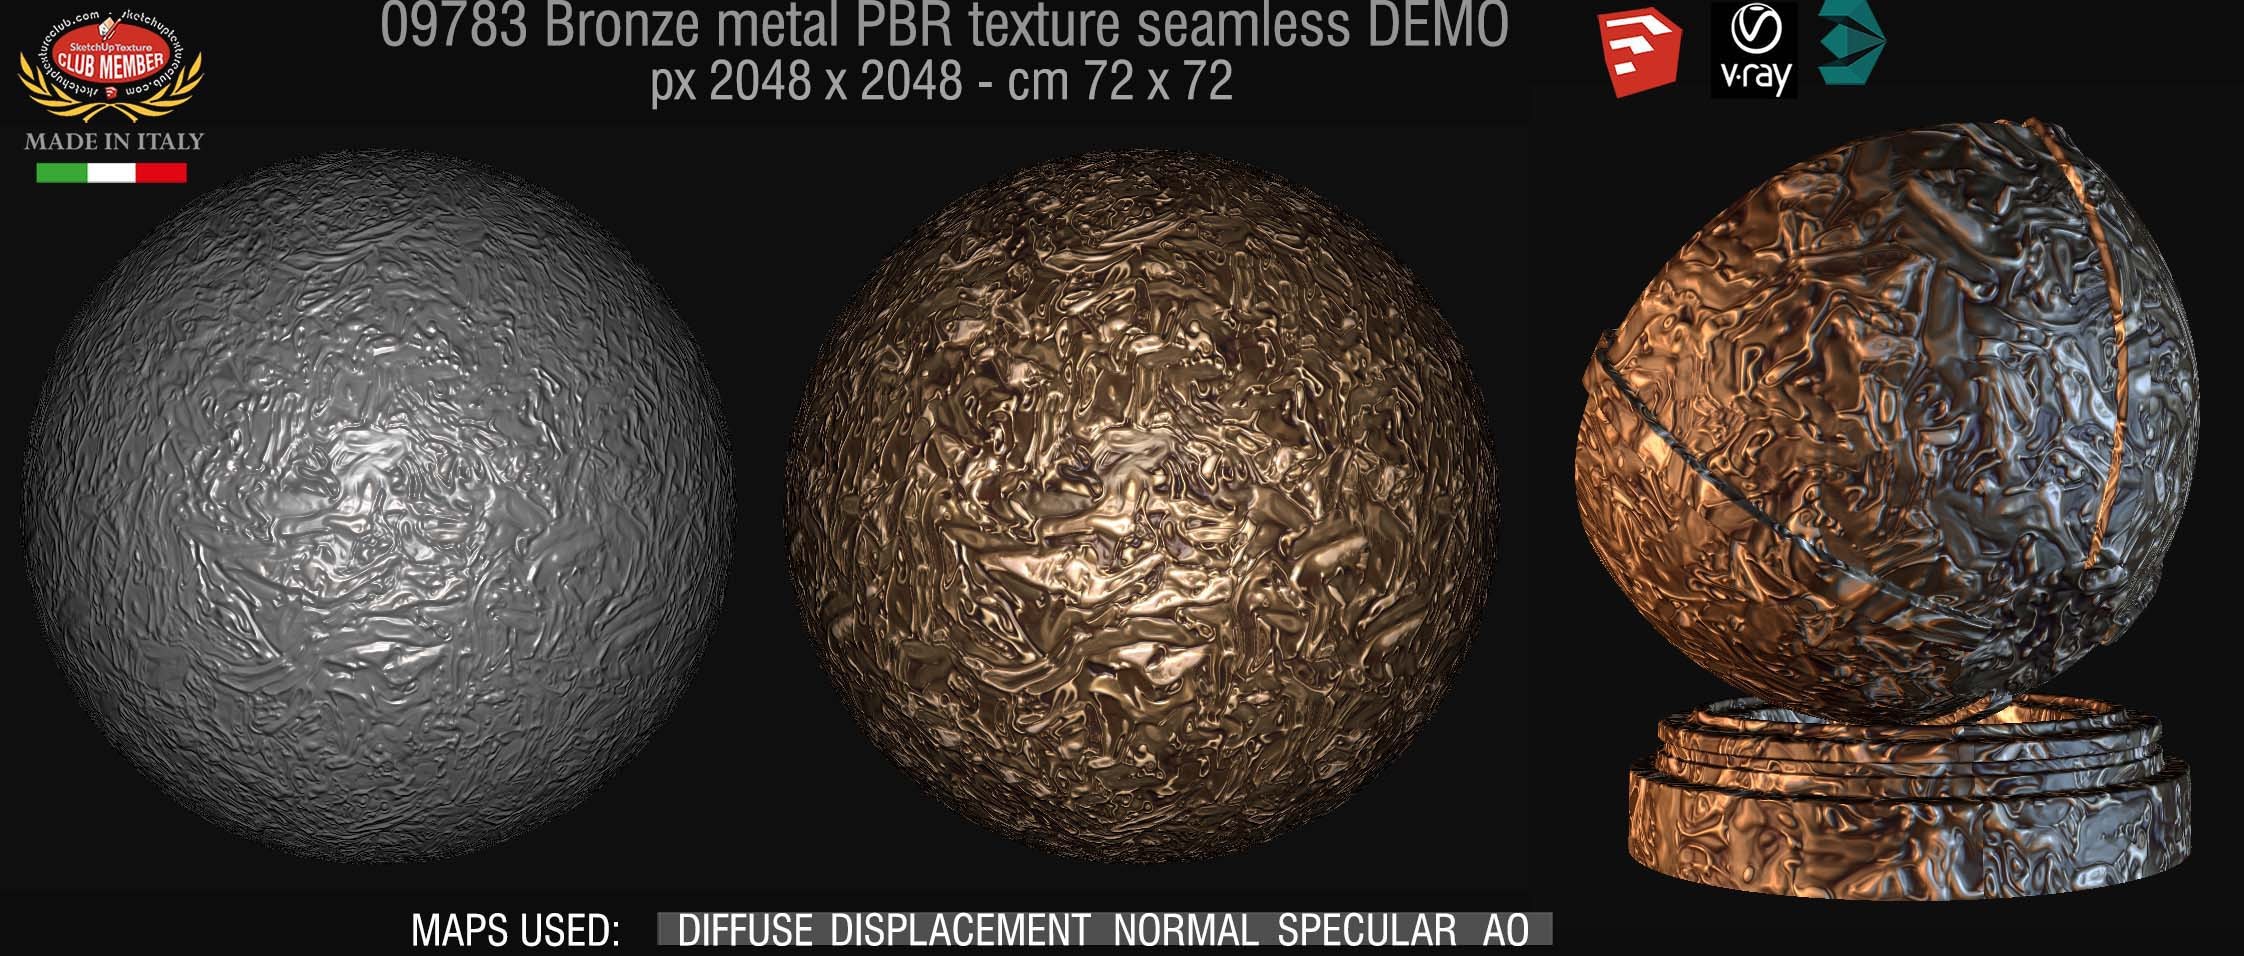 09783 Bronze metal PBR texture seamless DEMO